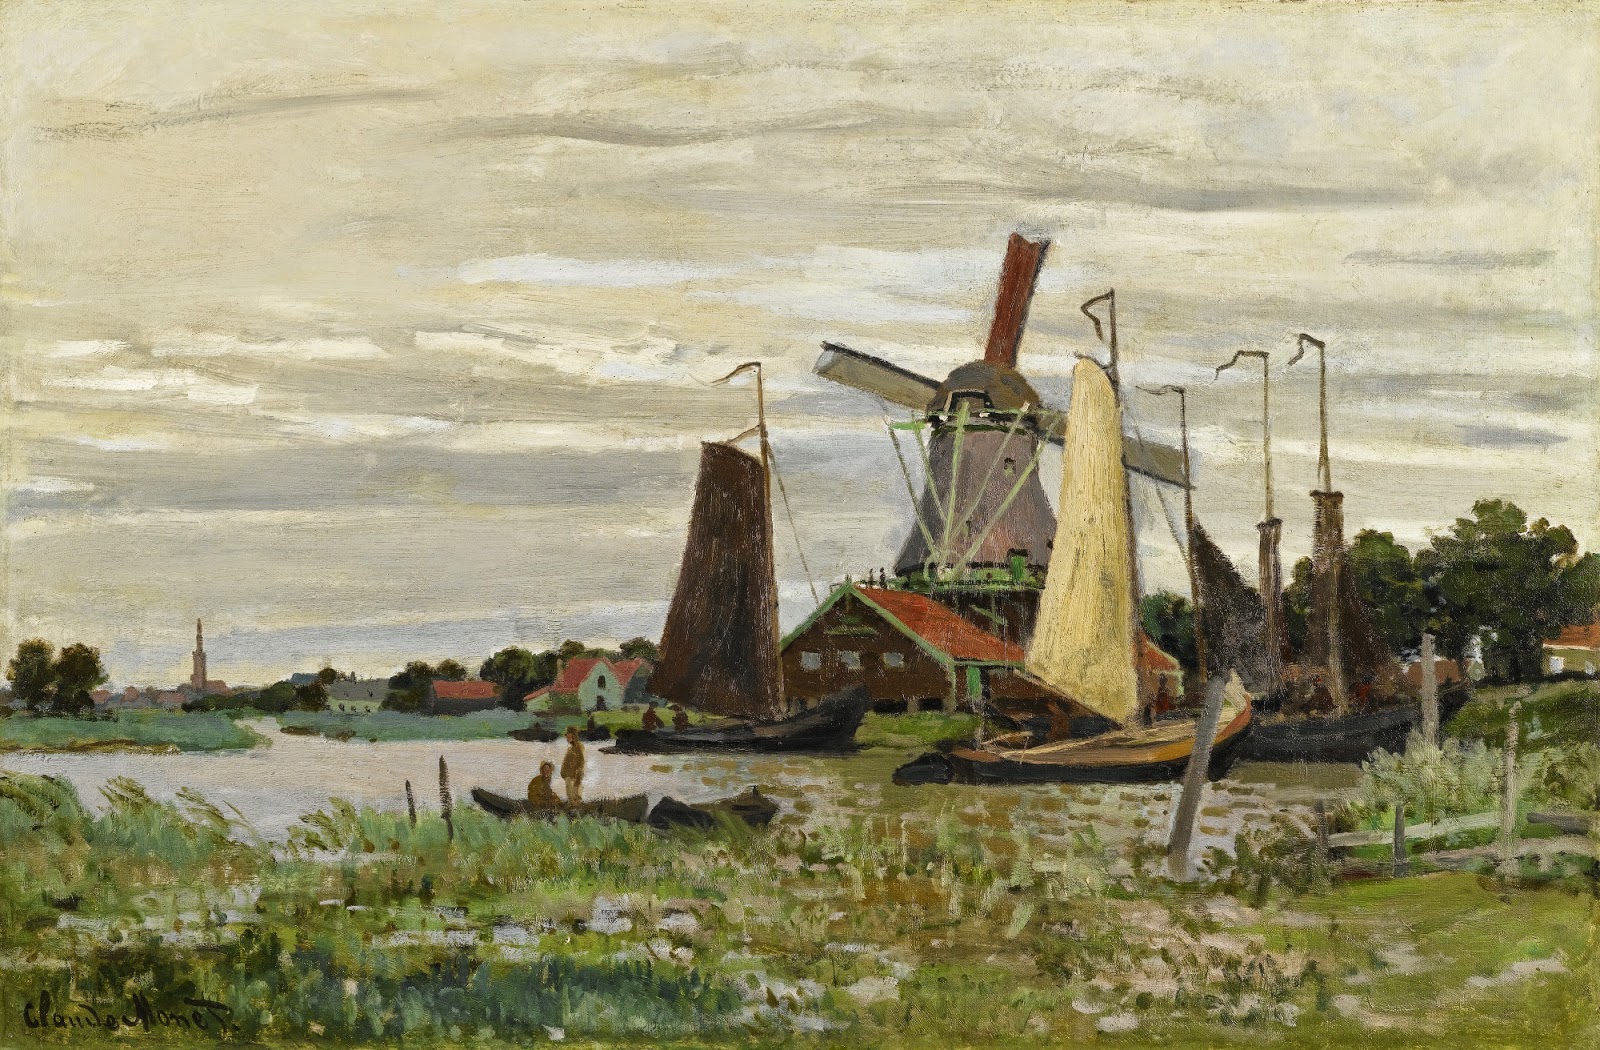 Claude+Monet-1840-1926 (499).jpg